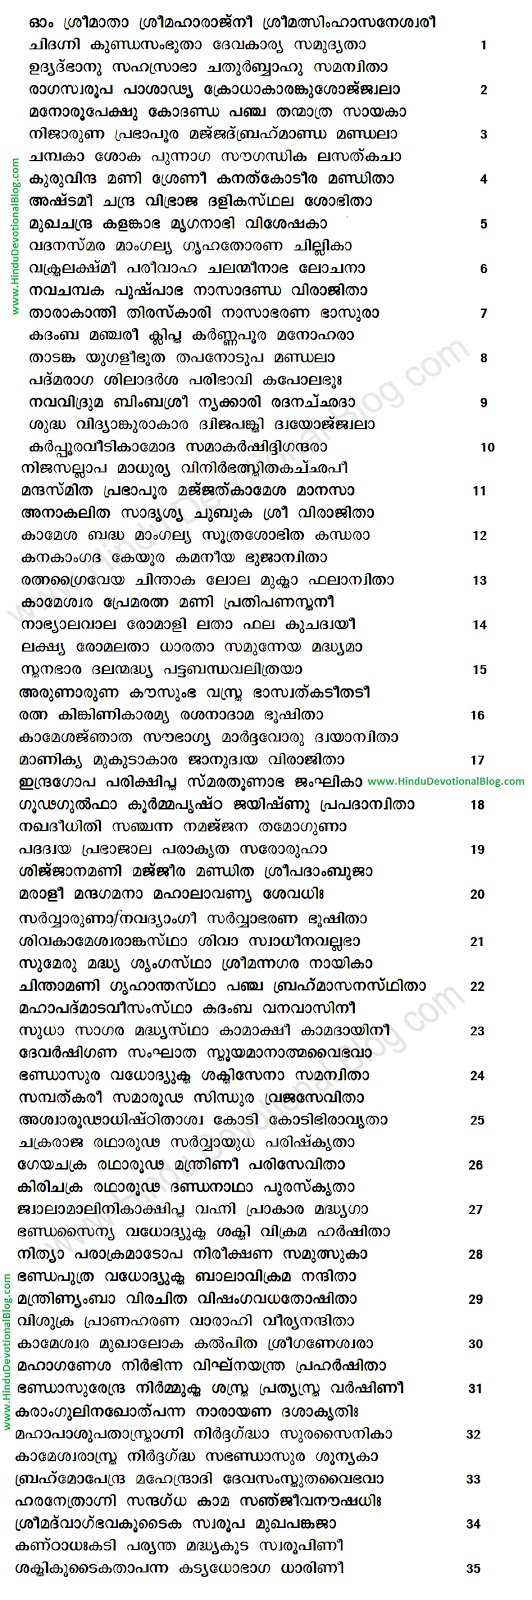 lalitha sahasranamam pdf download telugu